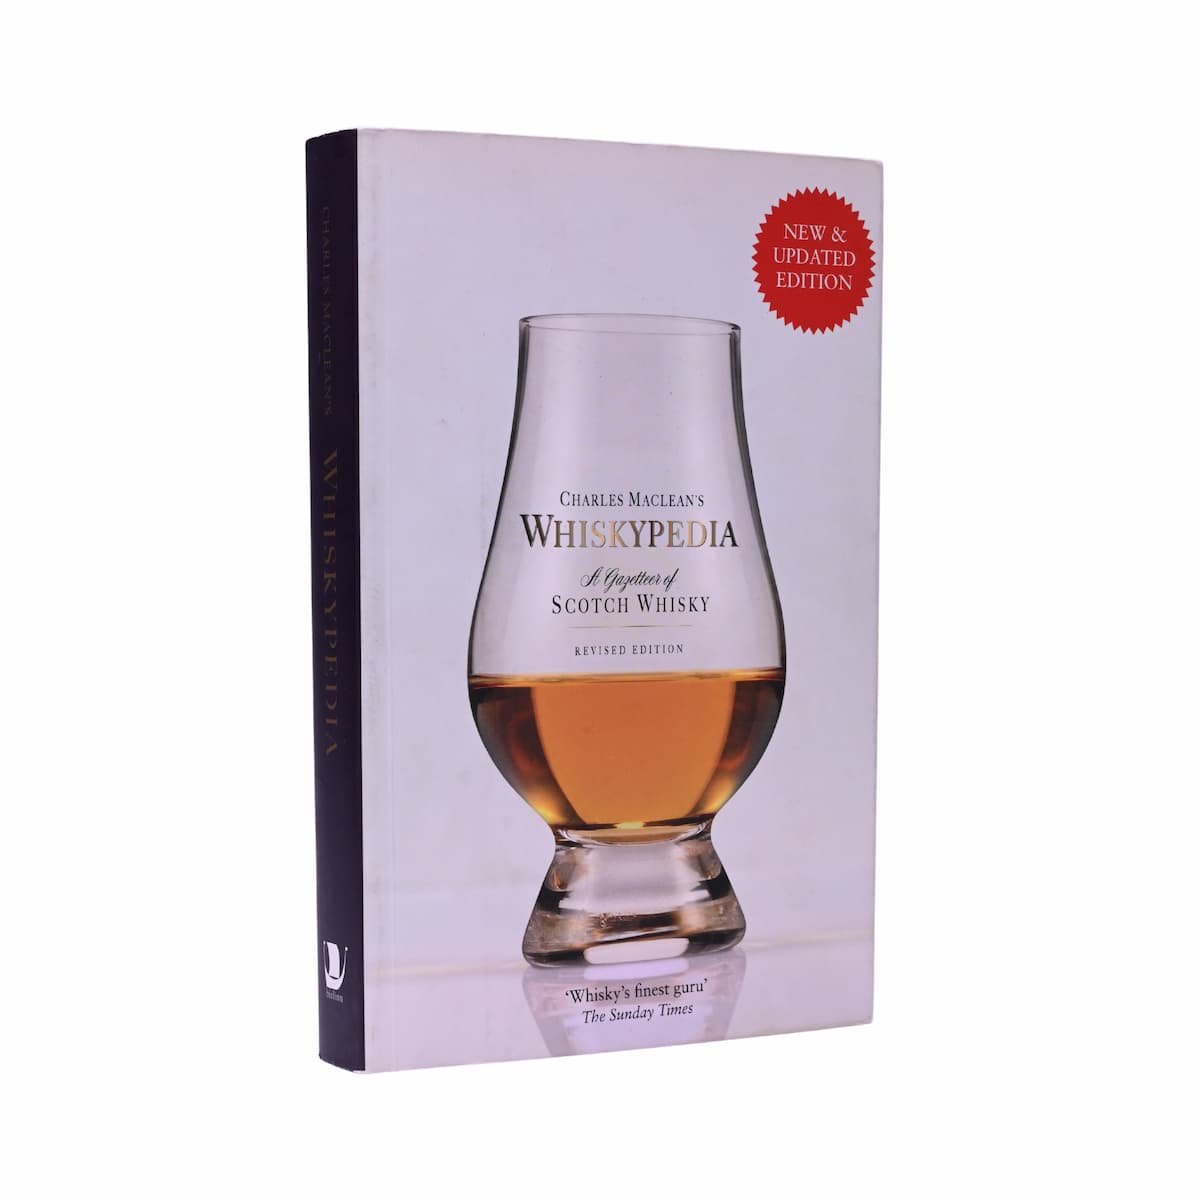 Whiskypedia A Gazetteer of Scotch Whisky Book